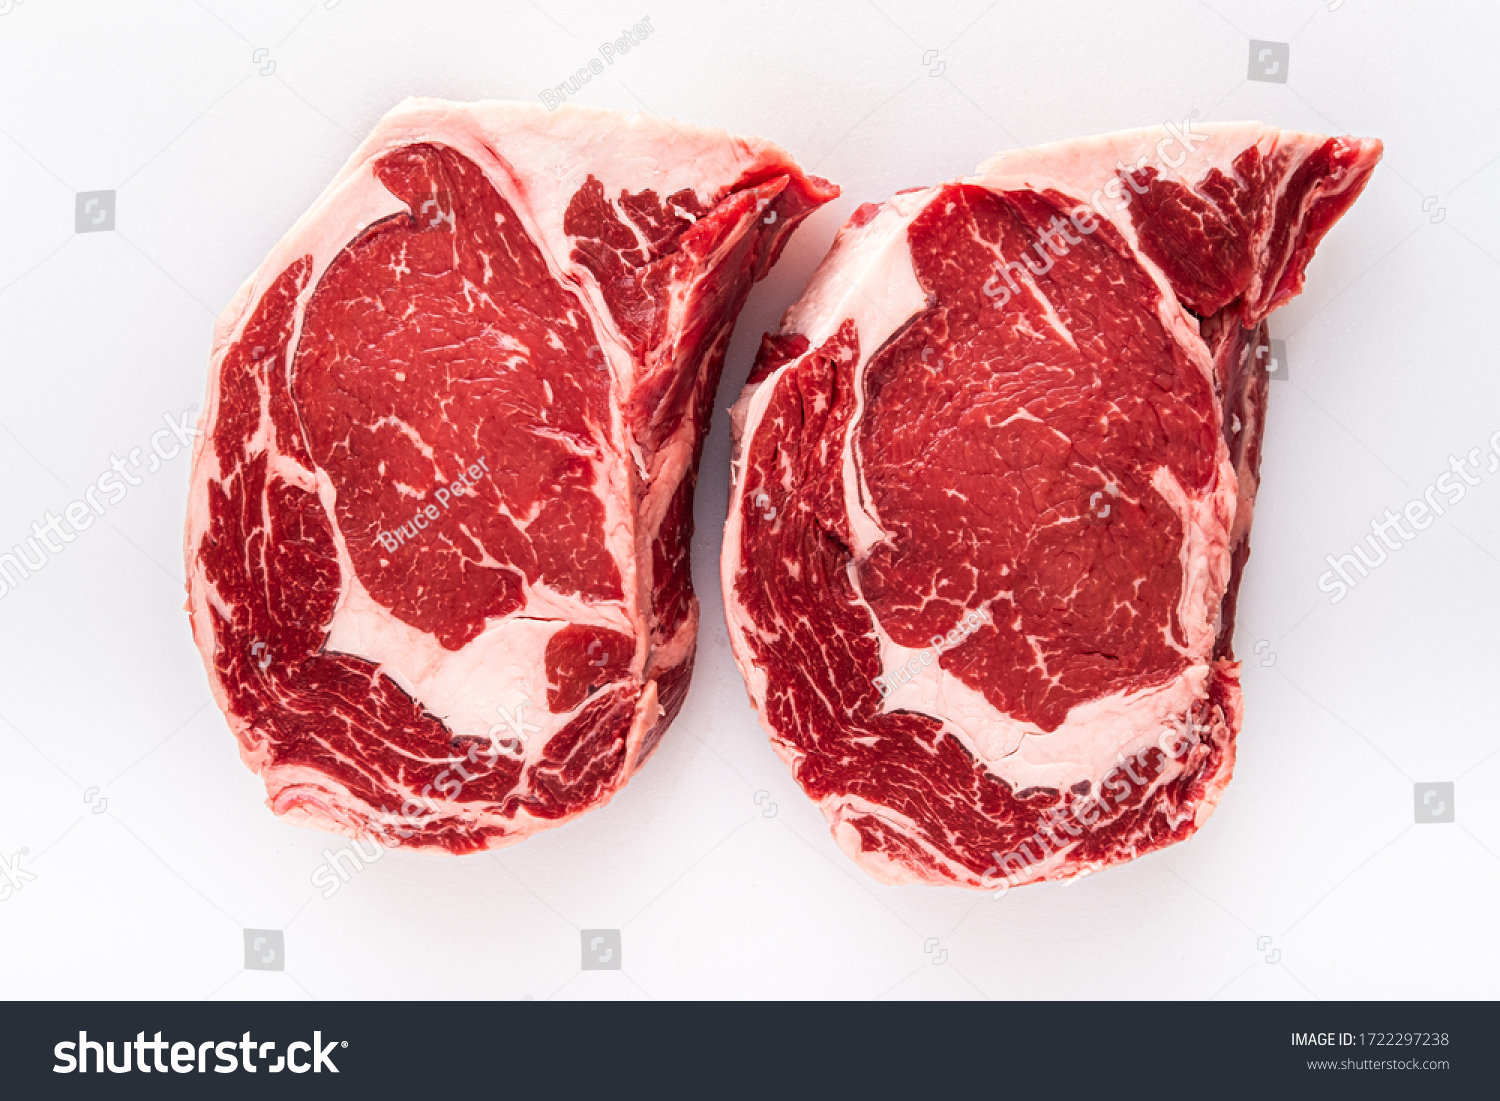 Two freshly cut boneless ribeye steaks on a butchers table #1722297238